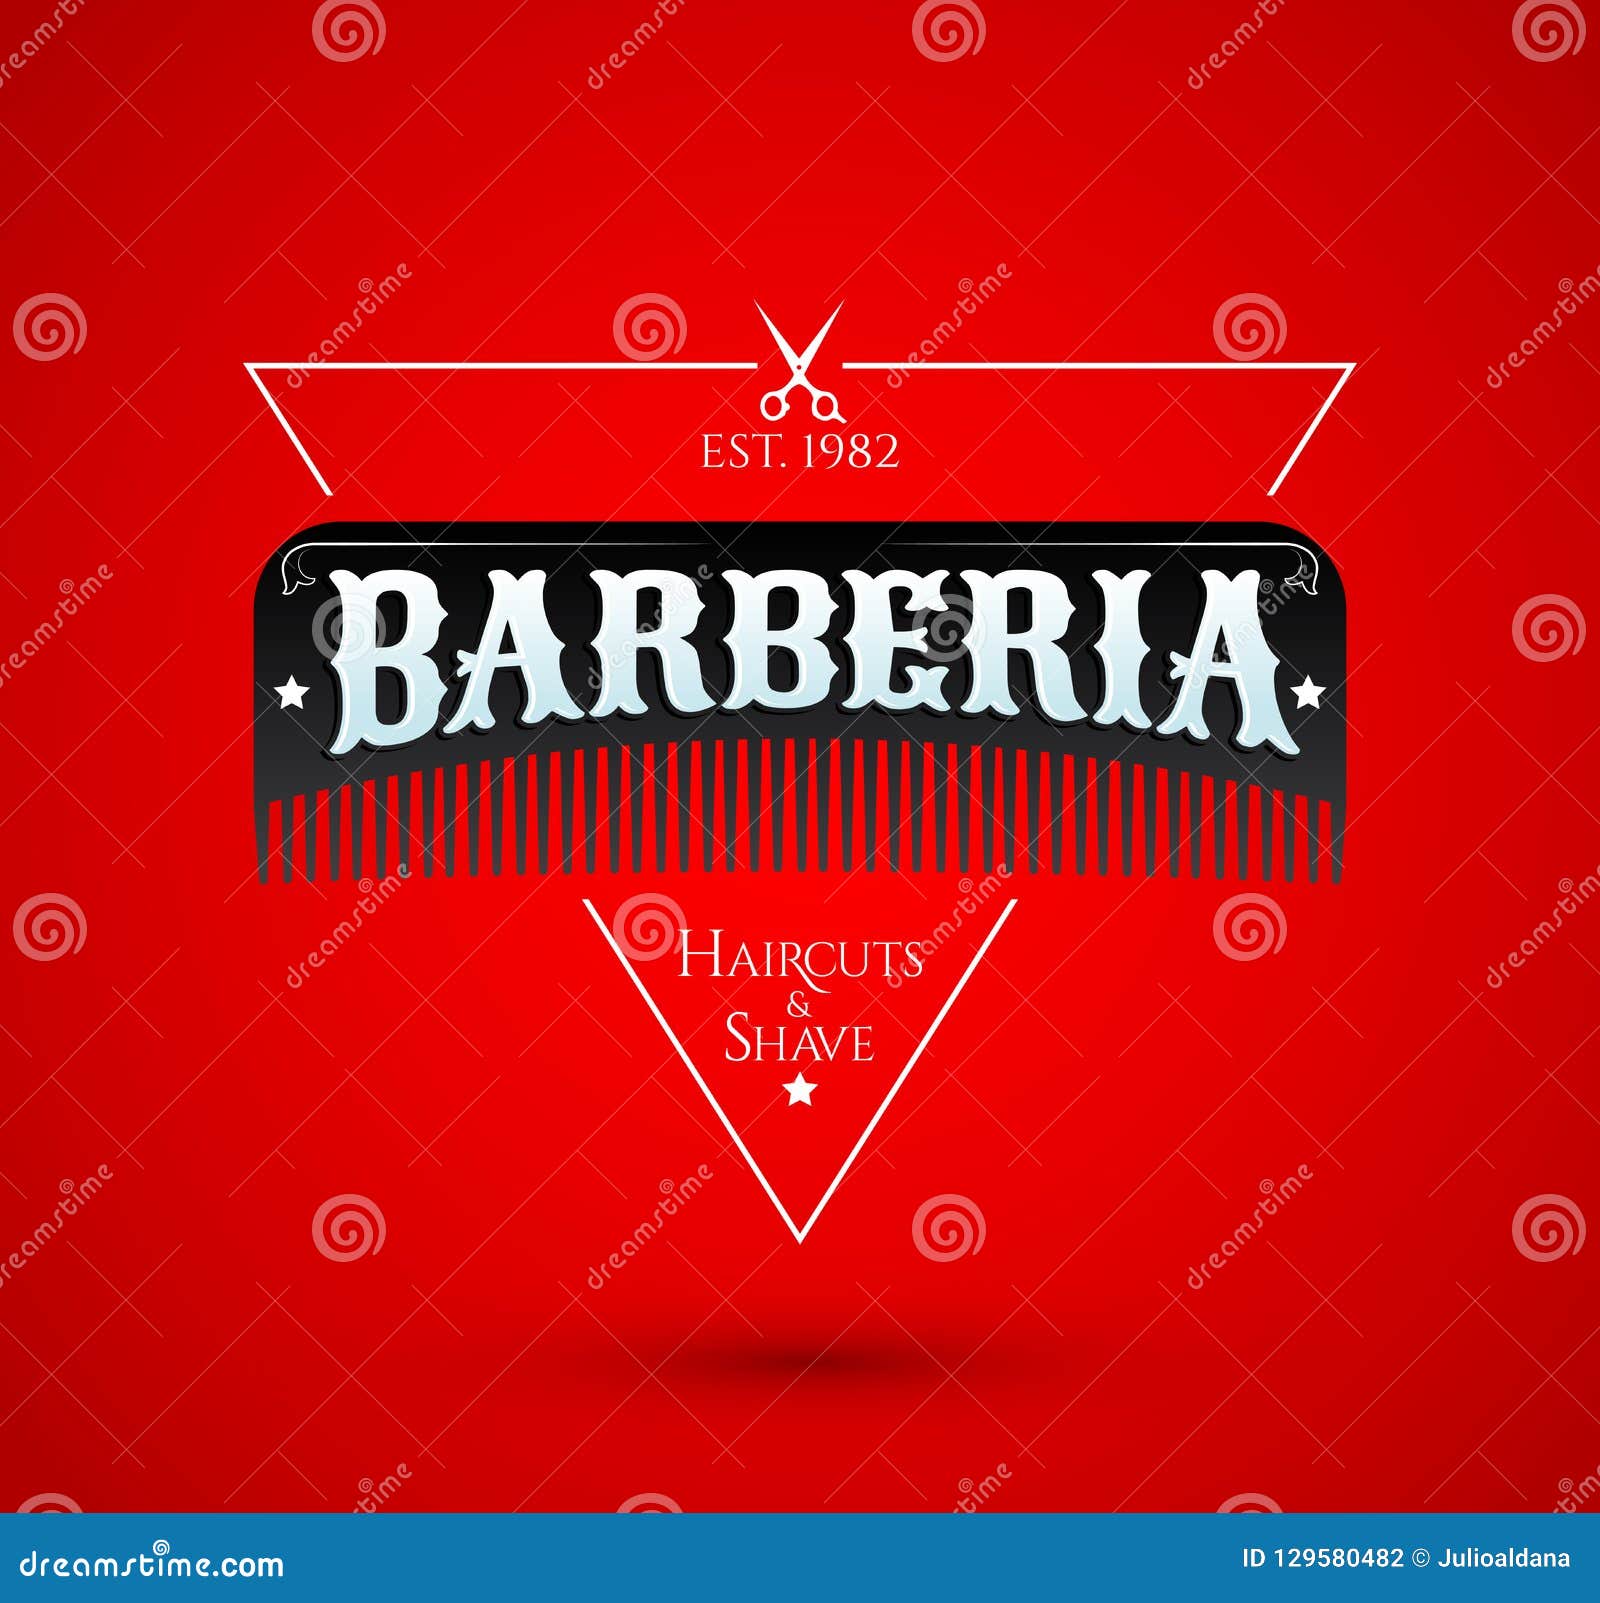 printbarberia, barbershop spanish text,  emblem  with hair comb